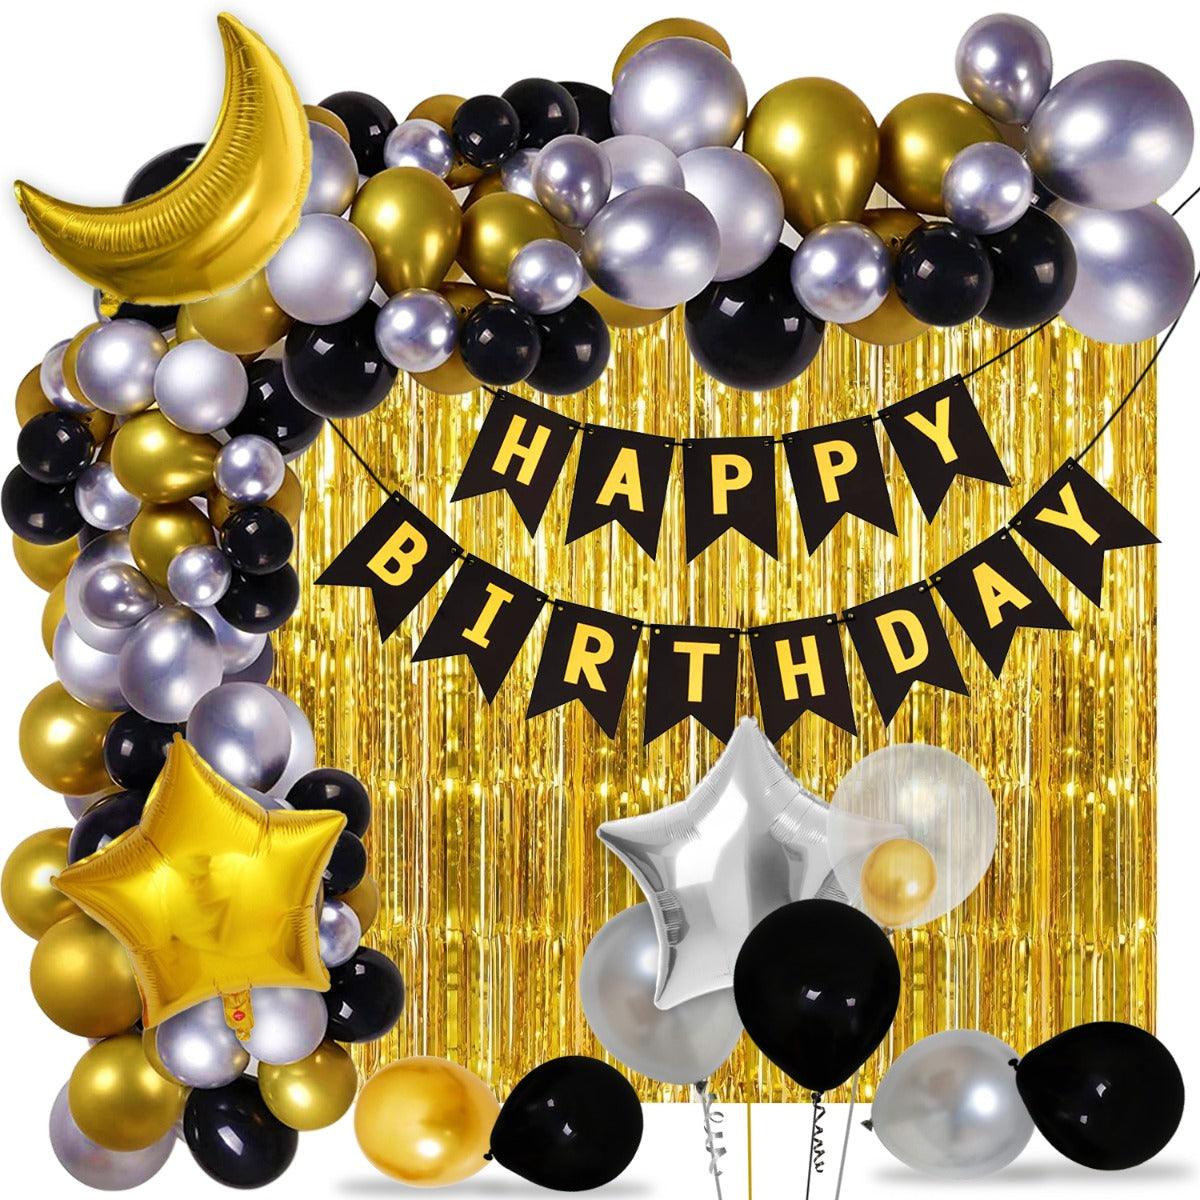 PartyCorp Happy Birthday Decoration Kit Combo 82 Pcs - Gold, Black & Silver Chrome Balloons(72 pcs), 1 pc Black & Gold Happy Birthday Printed Banner, 2 pc Gold Big Foil Curtain, 1 pc Moon & Star Foil Balloon Bouquet